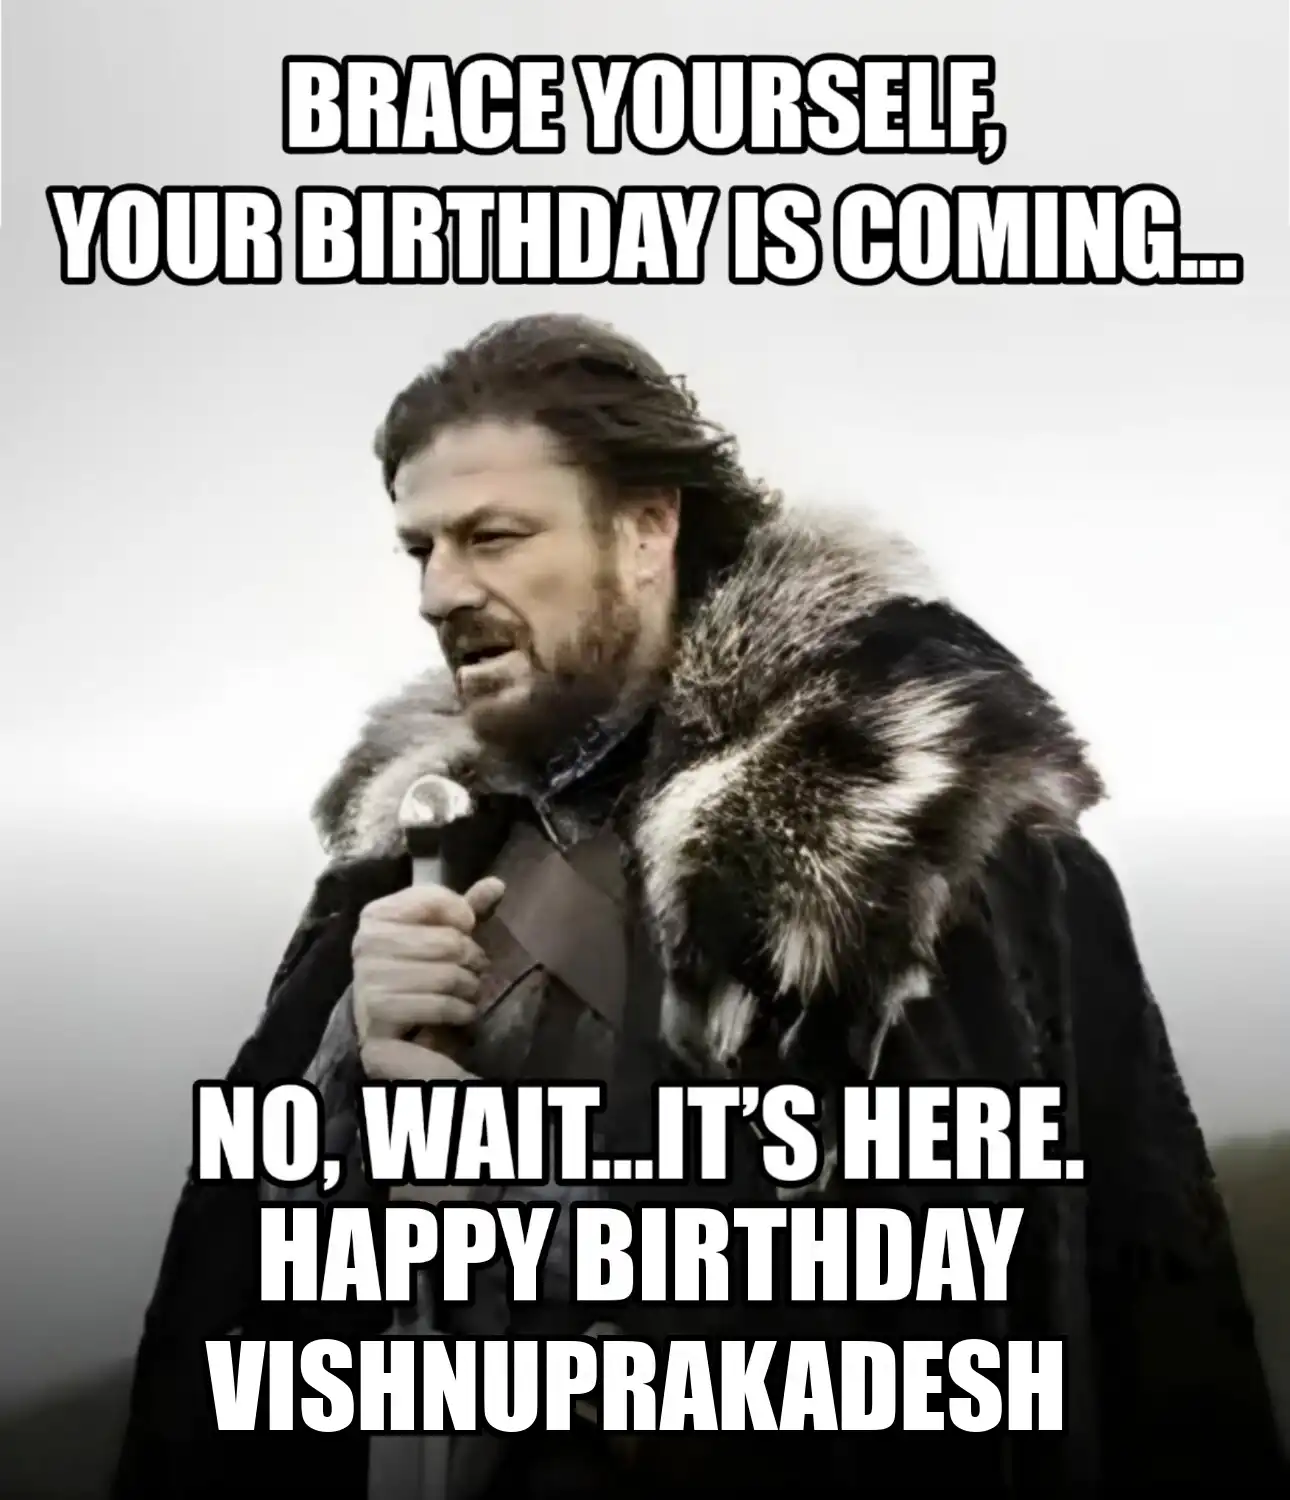 Happy Birthday Vishnuprakadesh Brace Yourself Your Birthday Is Coming Meme